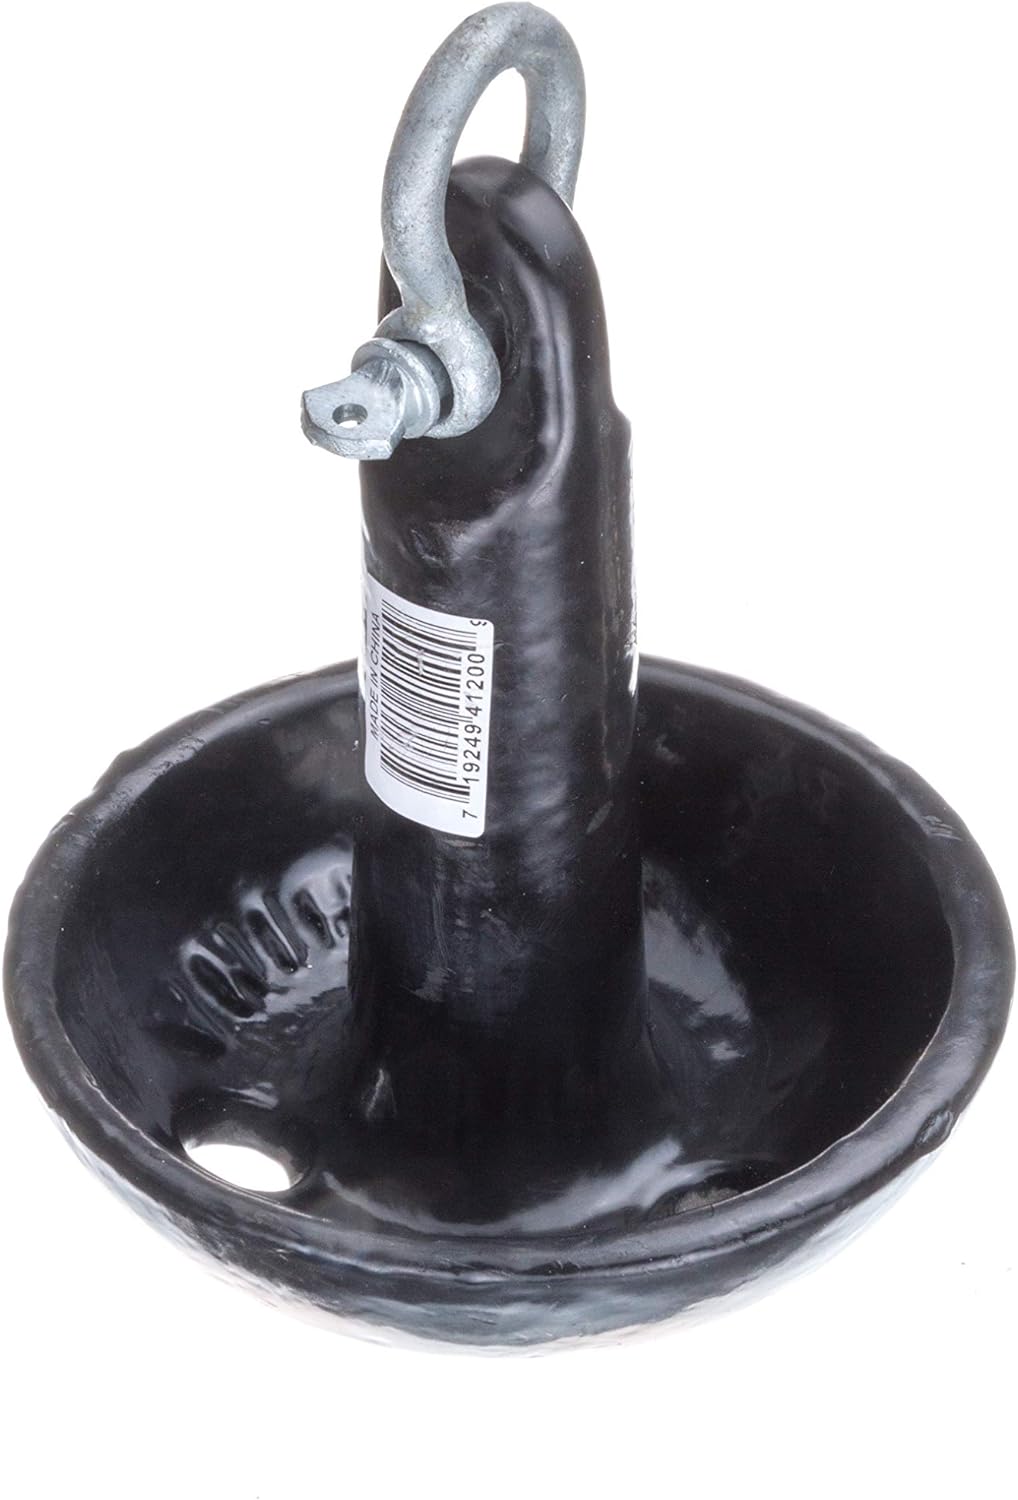 Seachoice Mushroom Anchor – Vinyl-Coated Cast Iron – Black – Multiple Sizes